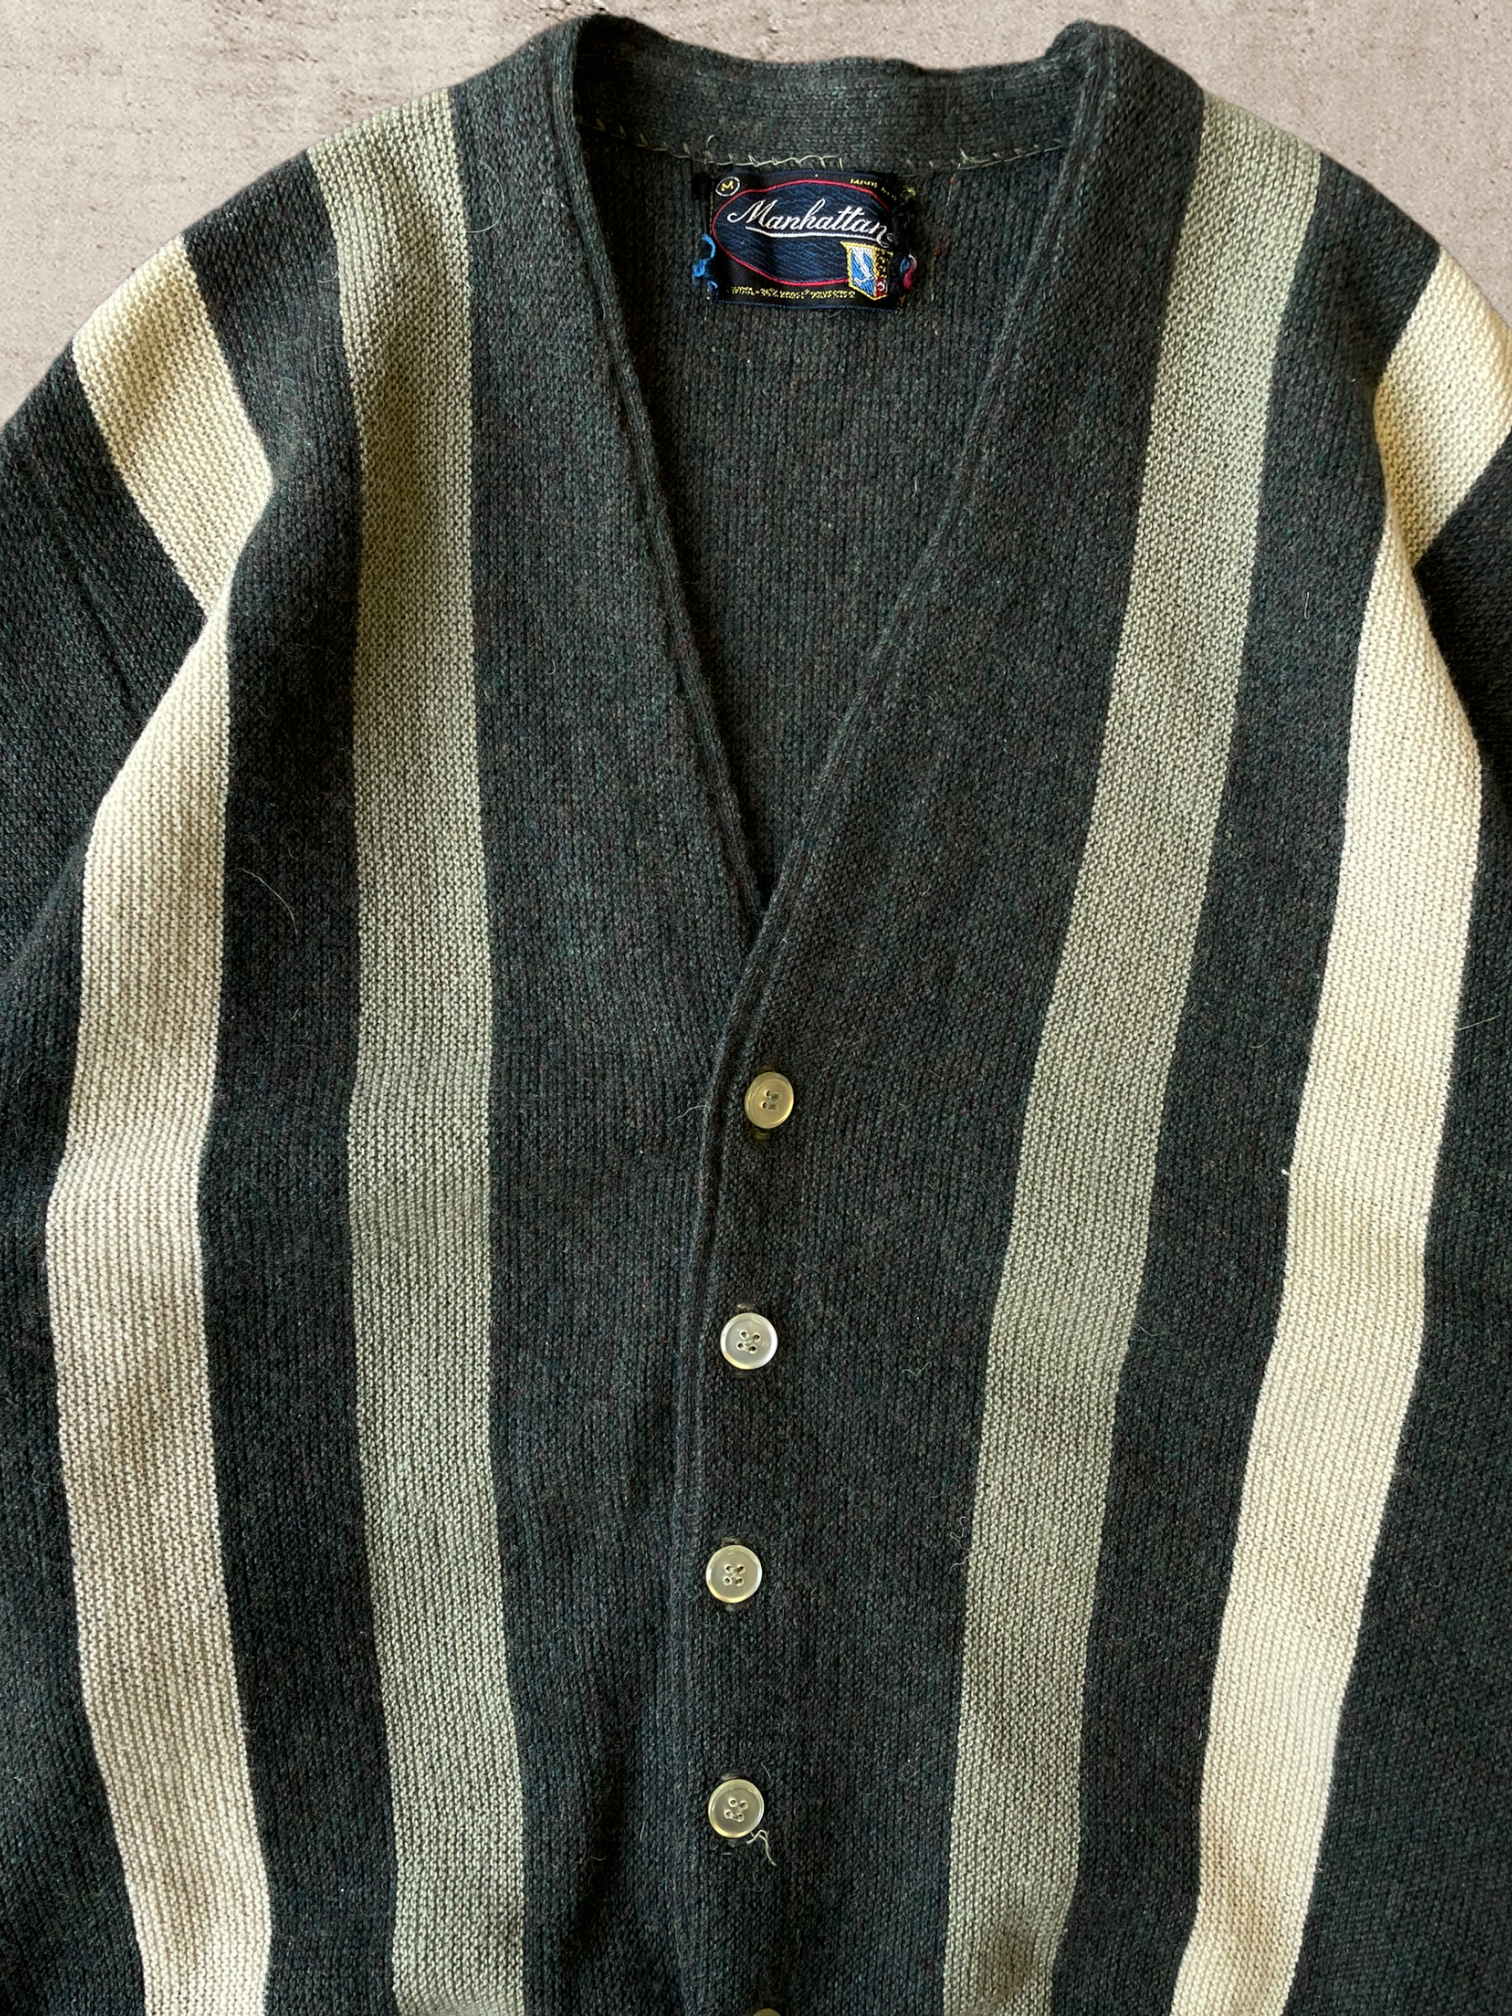 80s Stripped Knit Cardigan - Medium